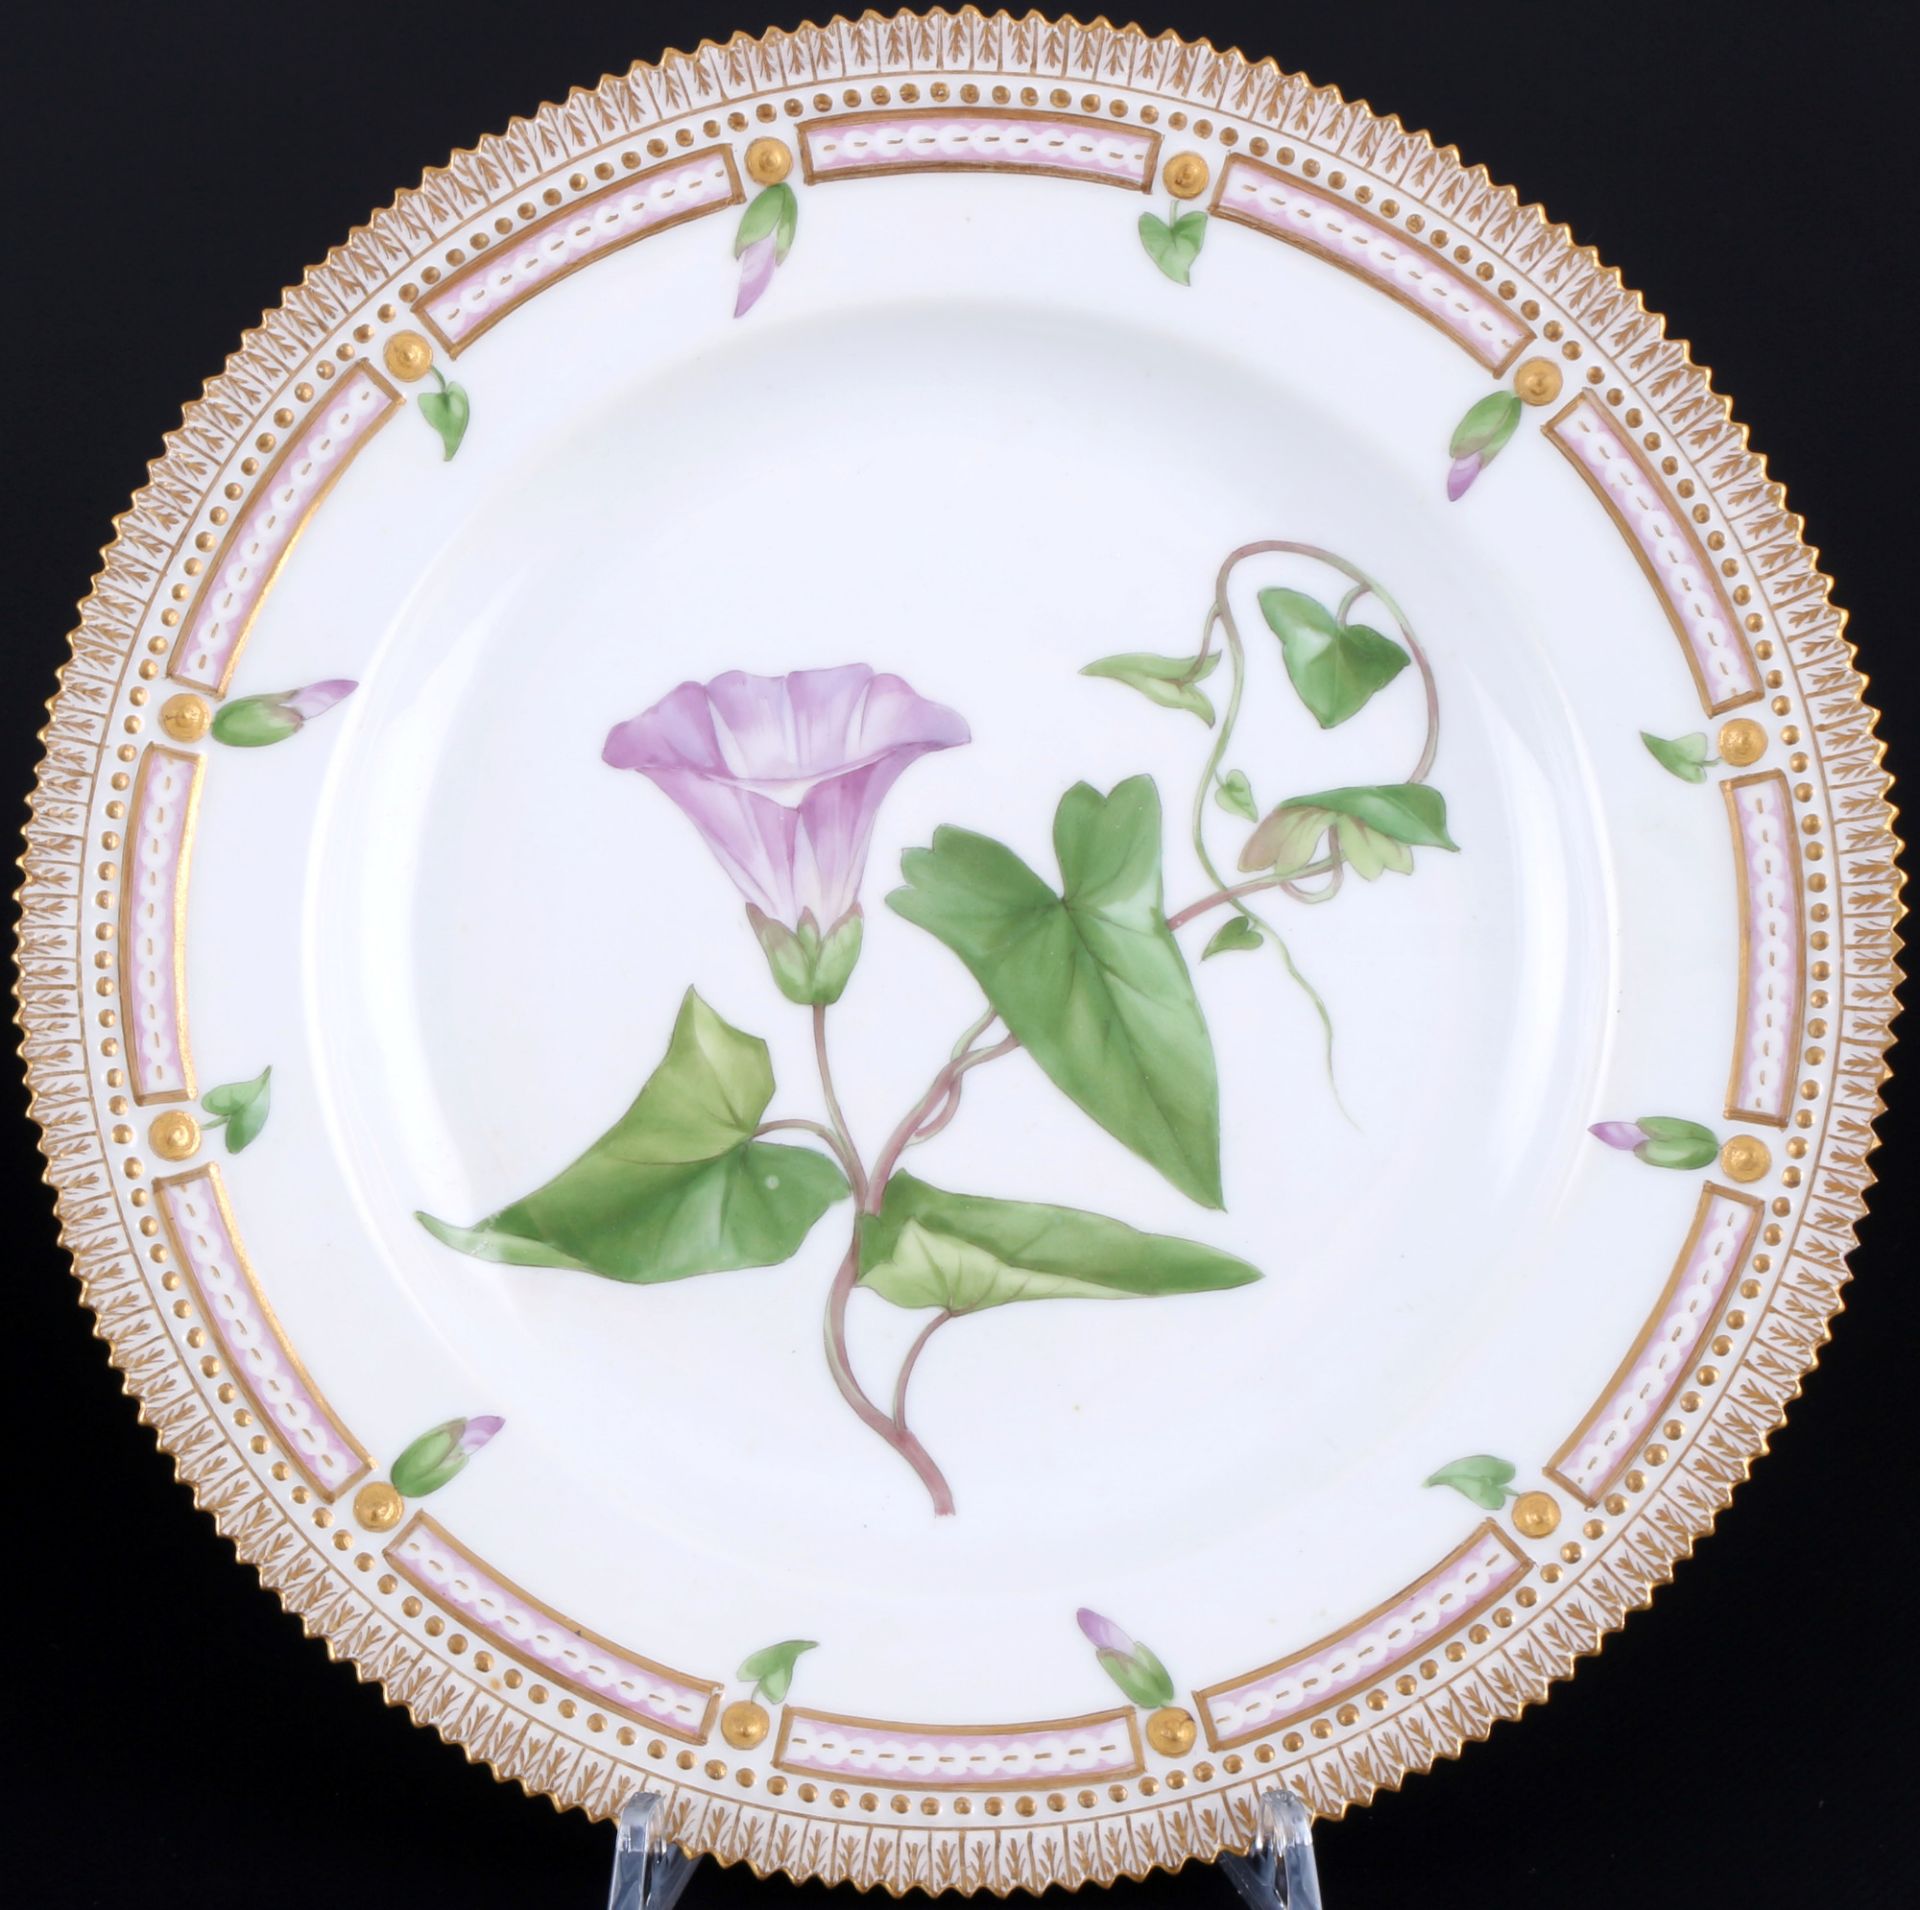 Royal Copenhagen Flora Danica 2 Speiseteller 3549, dinner plates 1st choice, - Bild 3 aus 9